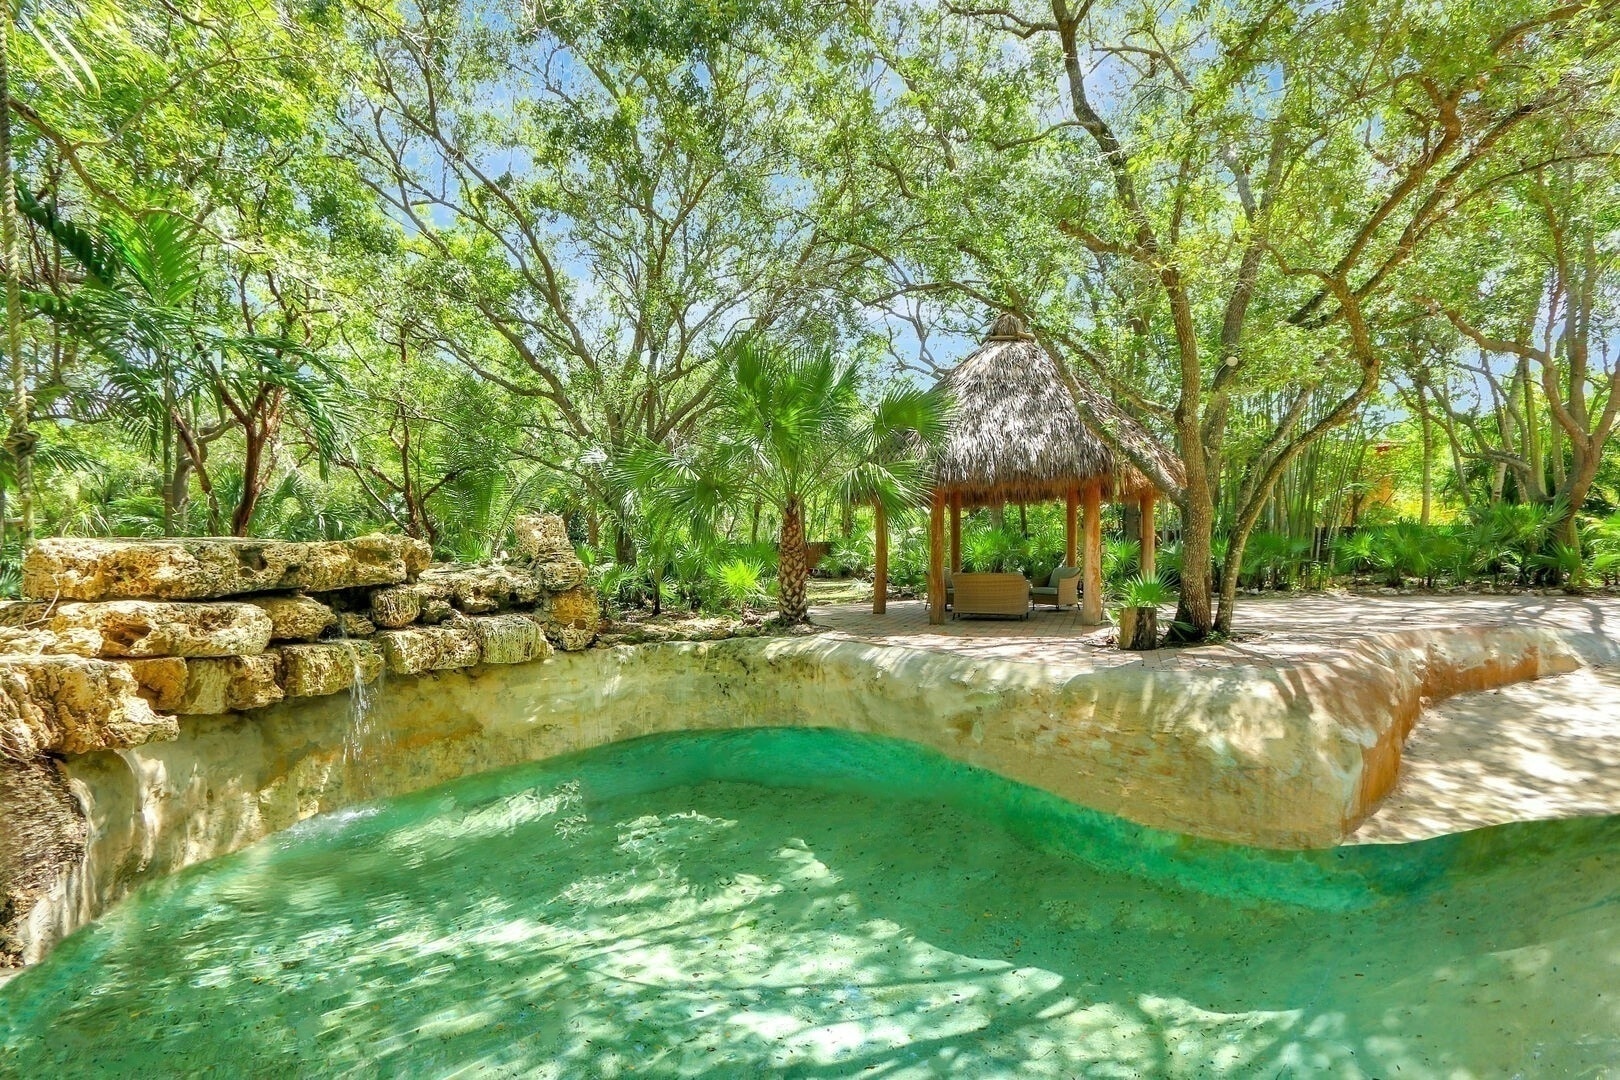 Lagoon Pool | centerpiece of the backyard